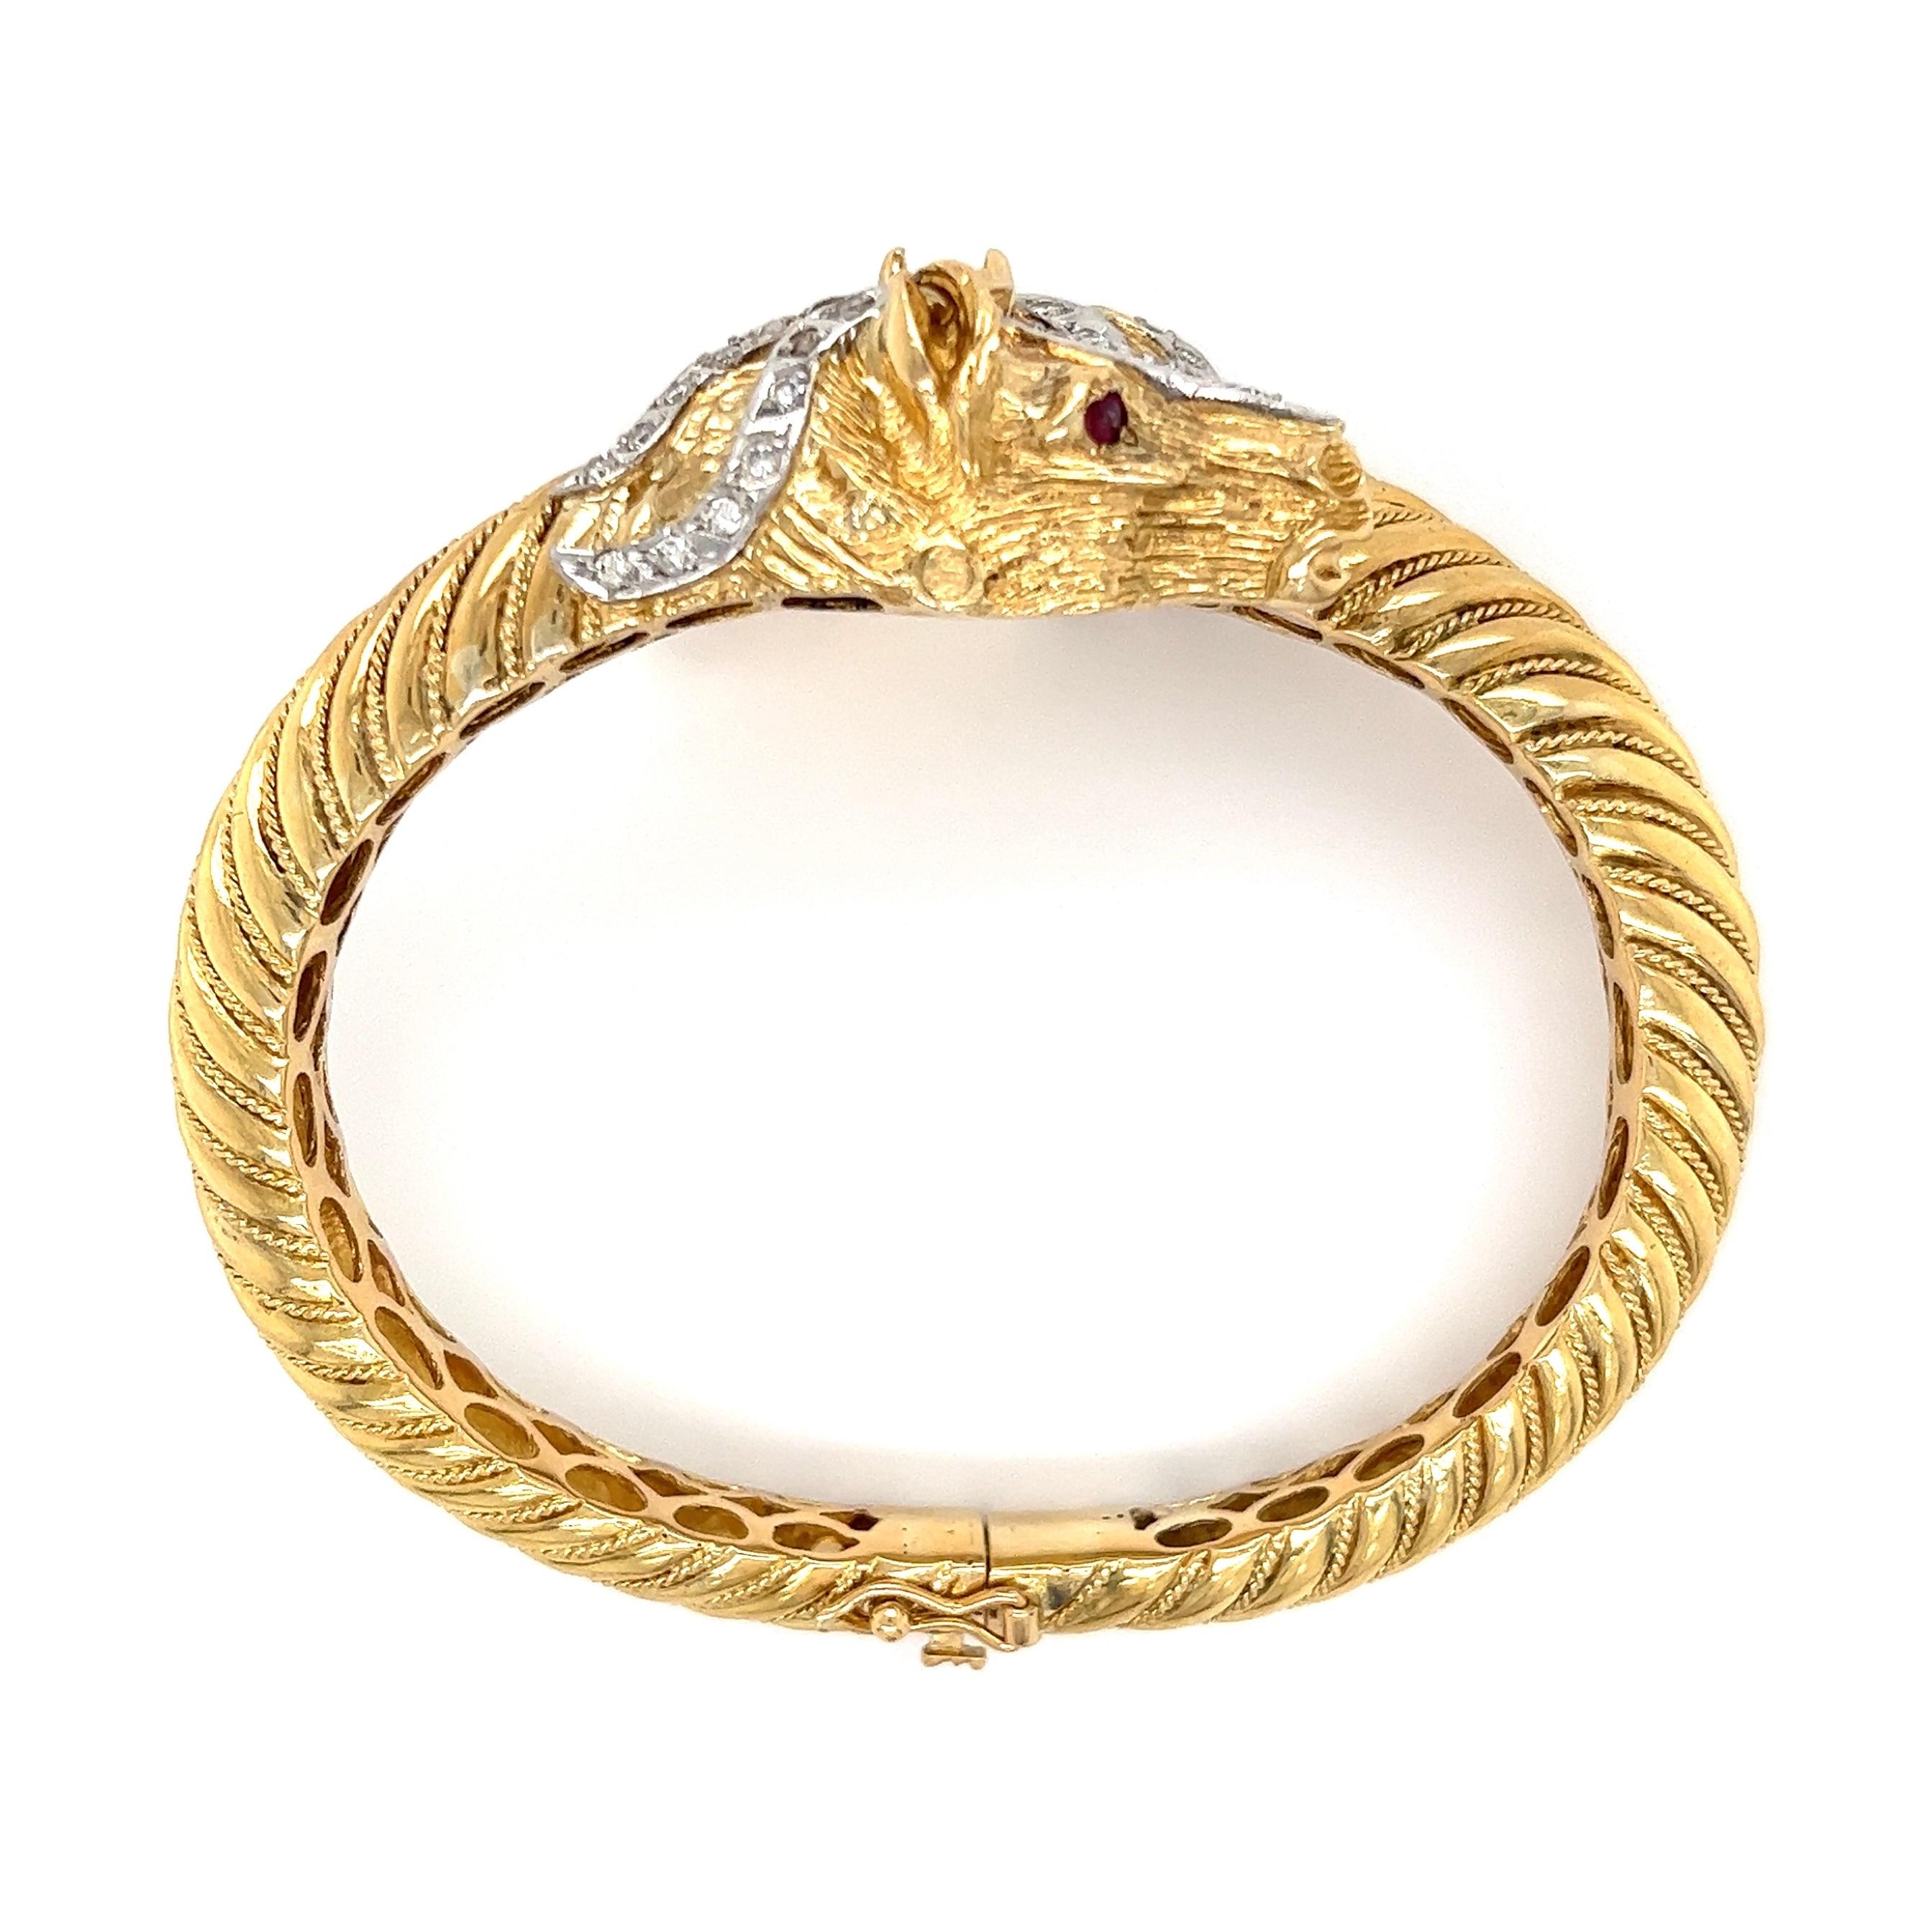 Brilliant Cut Double Horse Head Diamond Ruby Bypass Gold Bangle Bracelet Estate Fine Jewelry